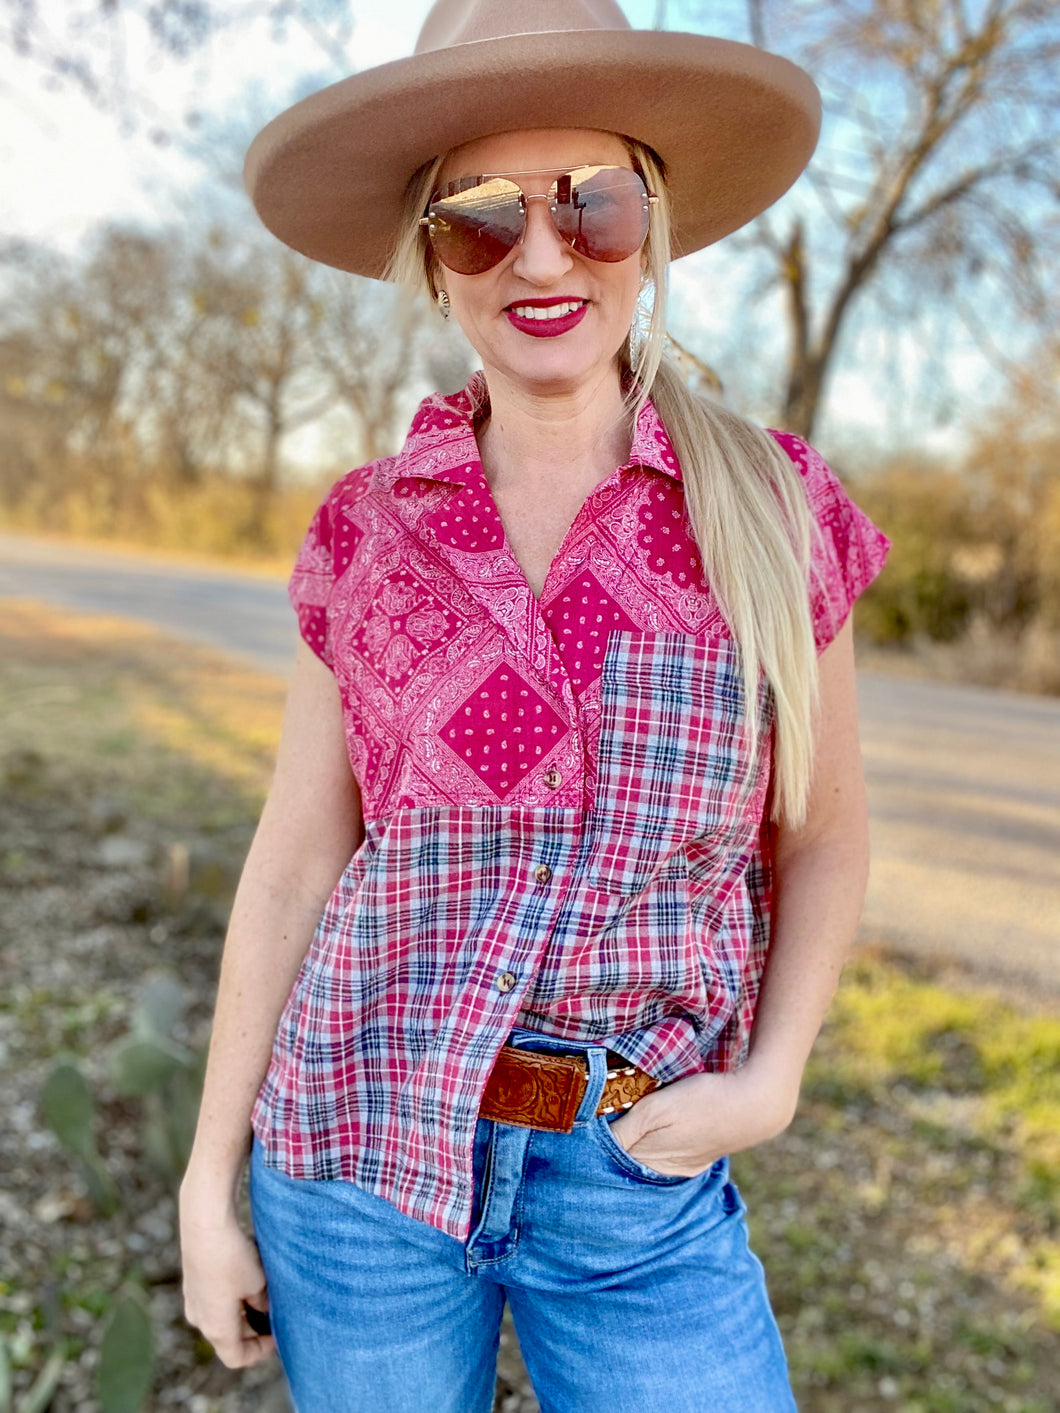 The raspberry farm blouse